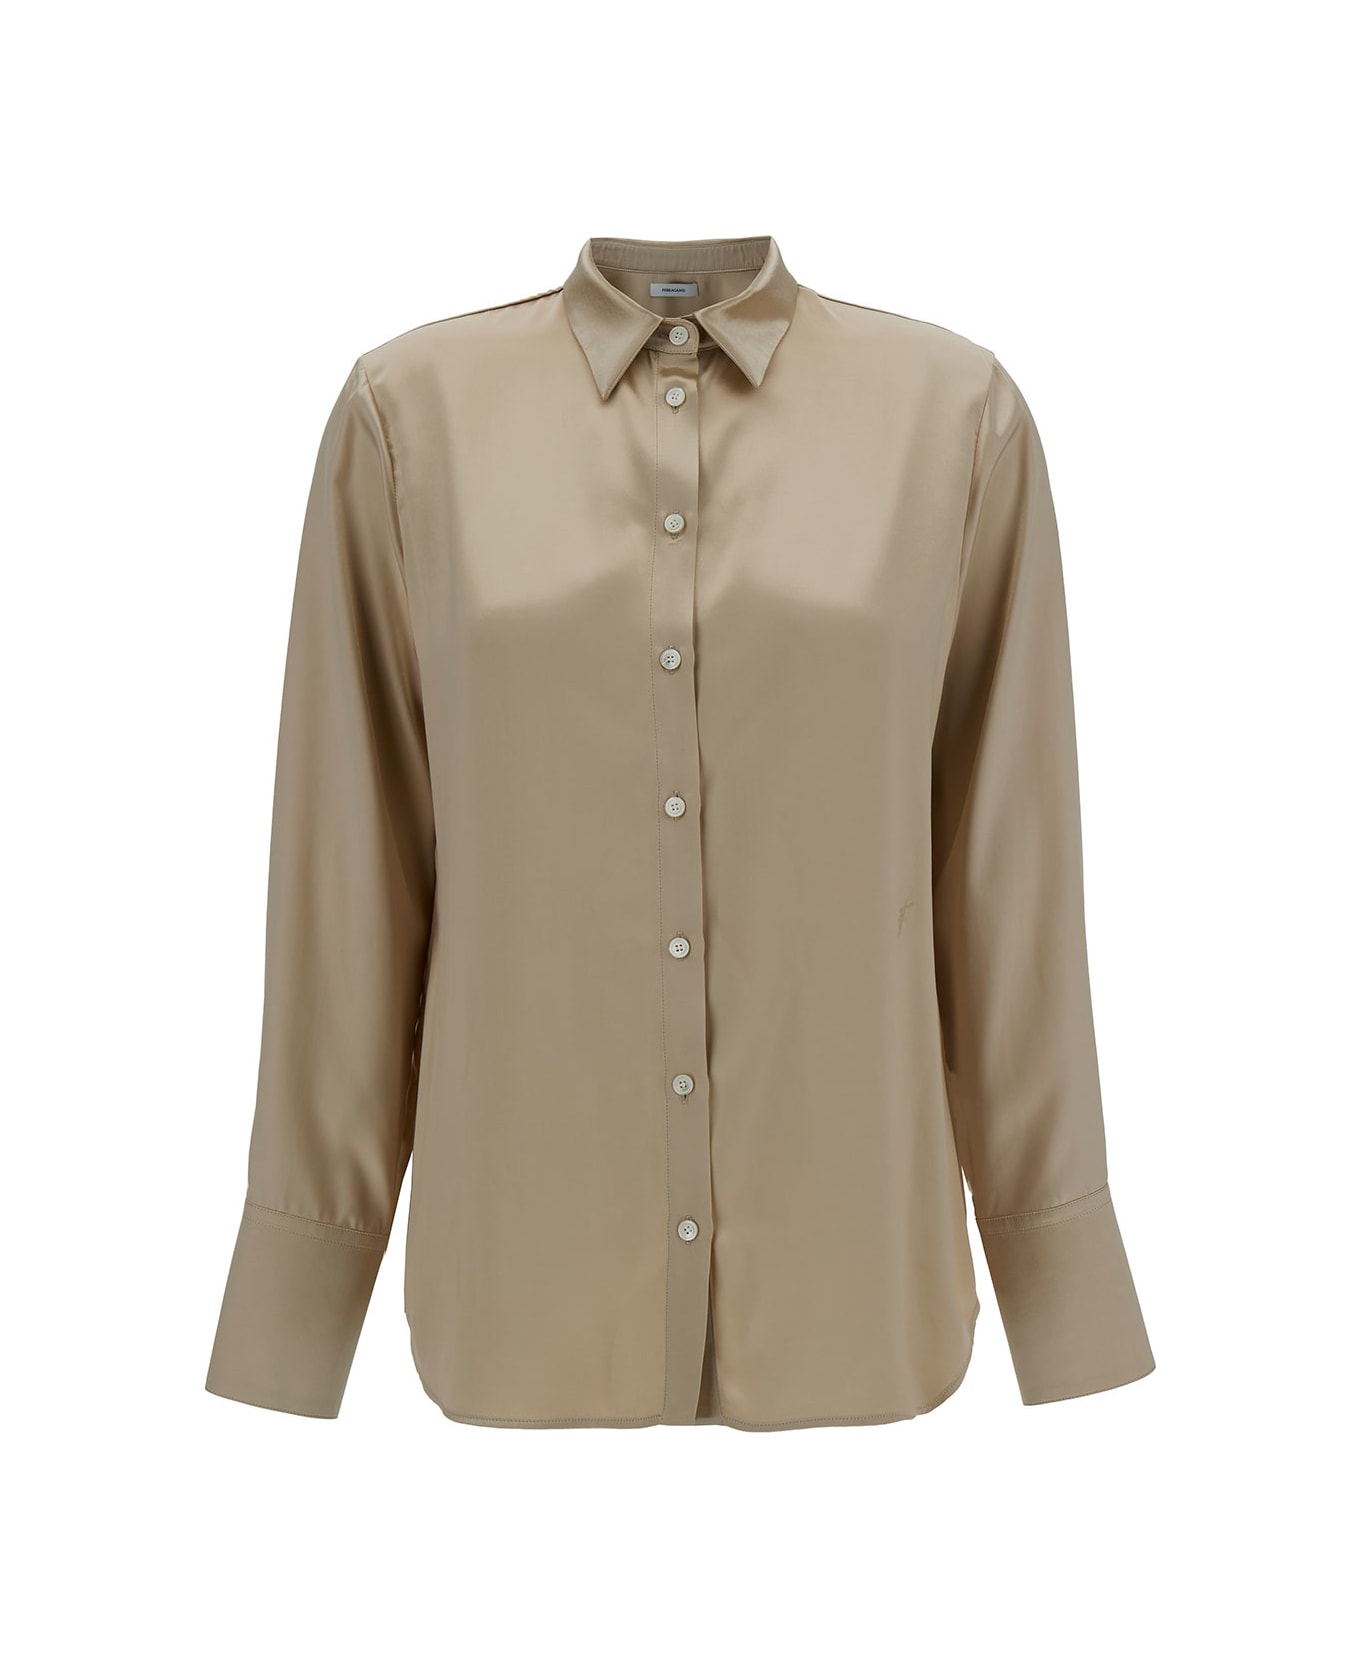 Ferragamo Beige Loose Shirt With Classic Collar In Rayon Woman - Beige シャツ